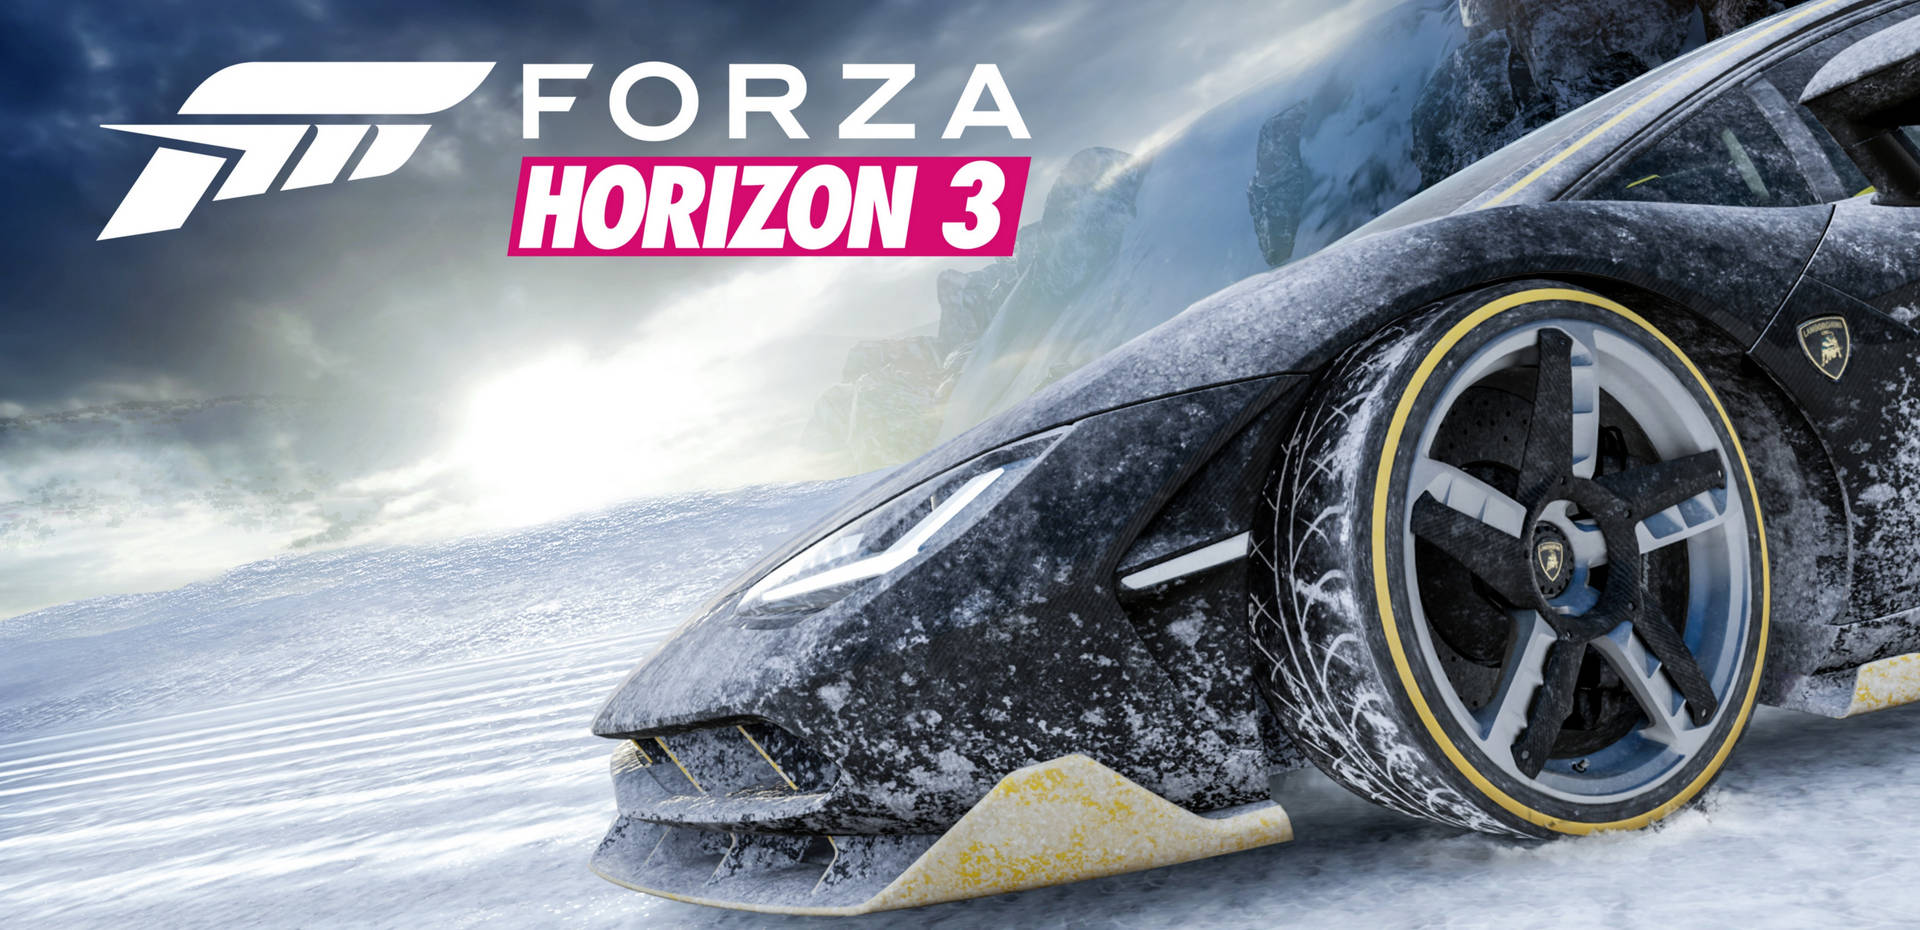 Forza Horizon 3 - Pc - Pc Game Wallpaper